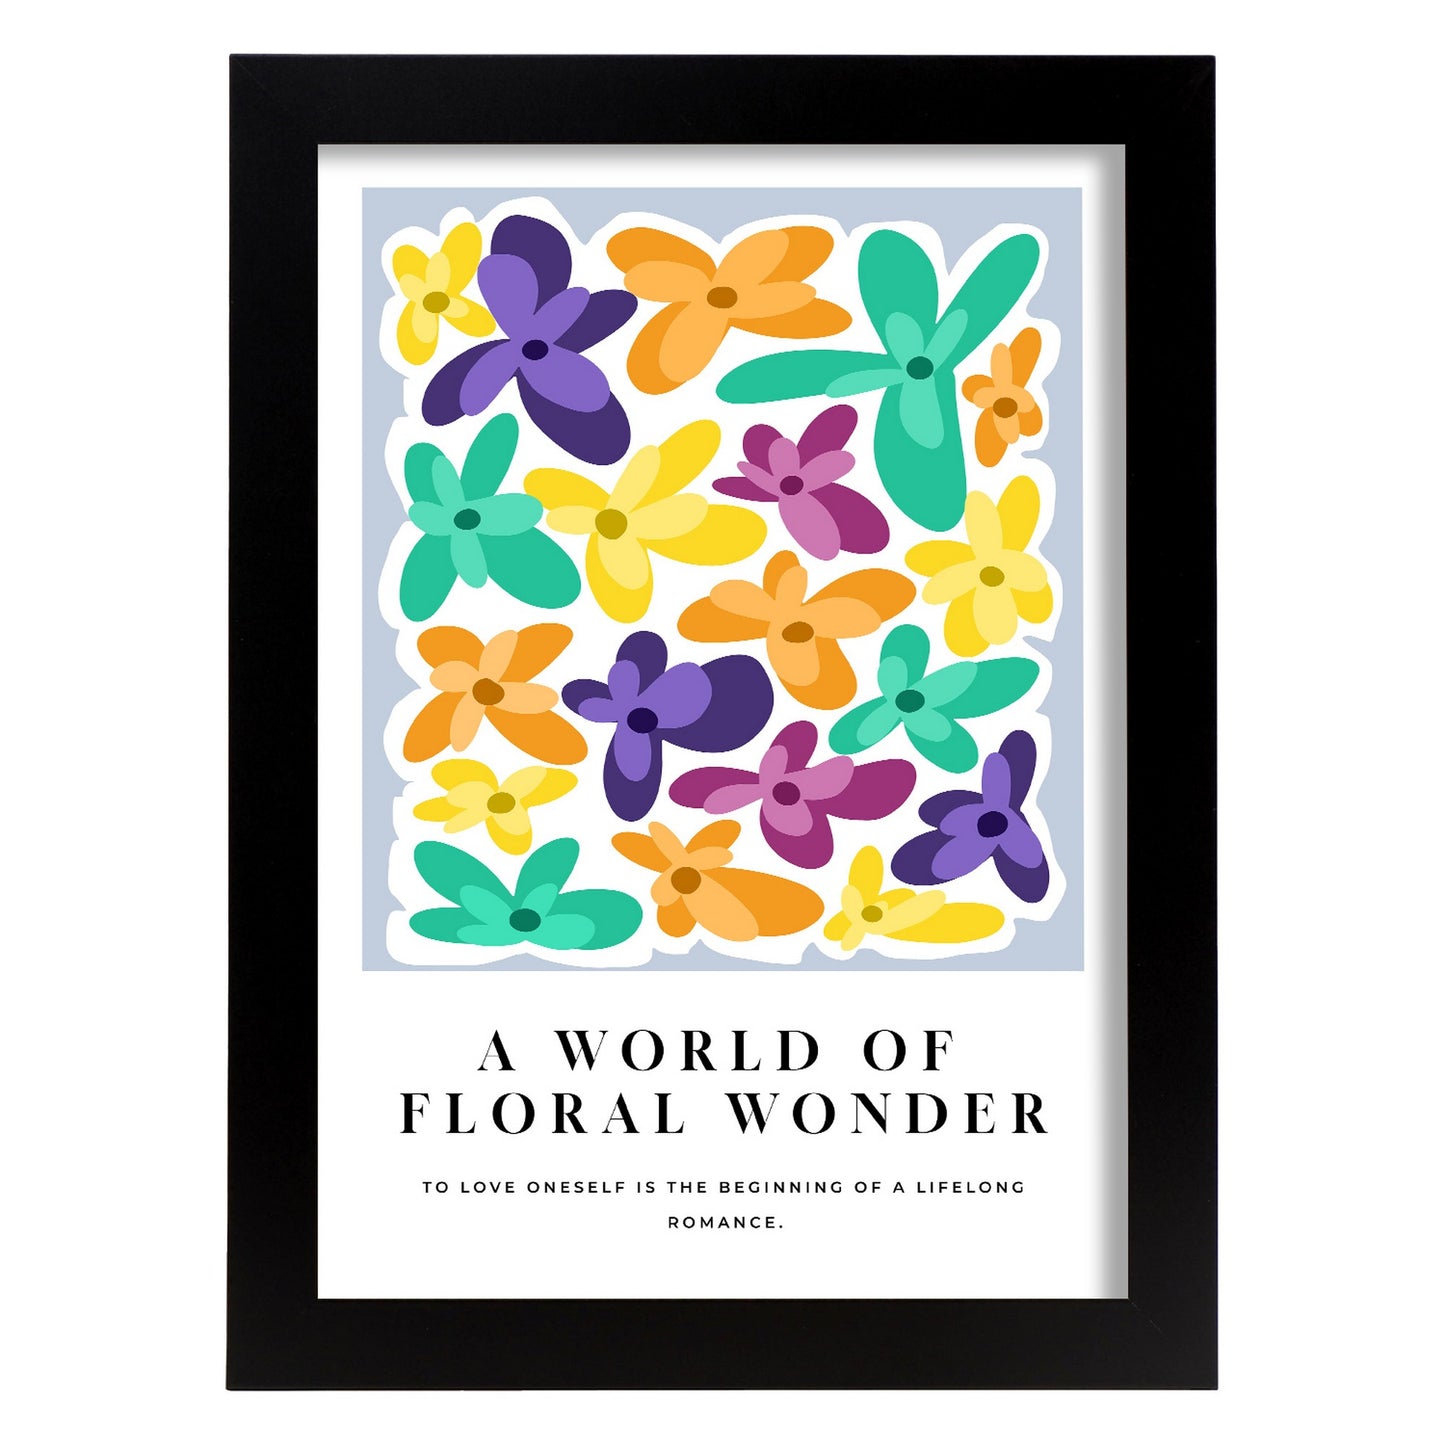 Lámina estética de Un mundo de maravilla floral para diseño de hogar